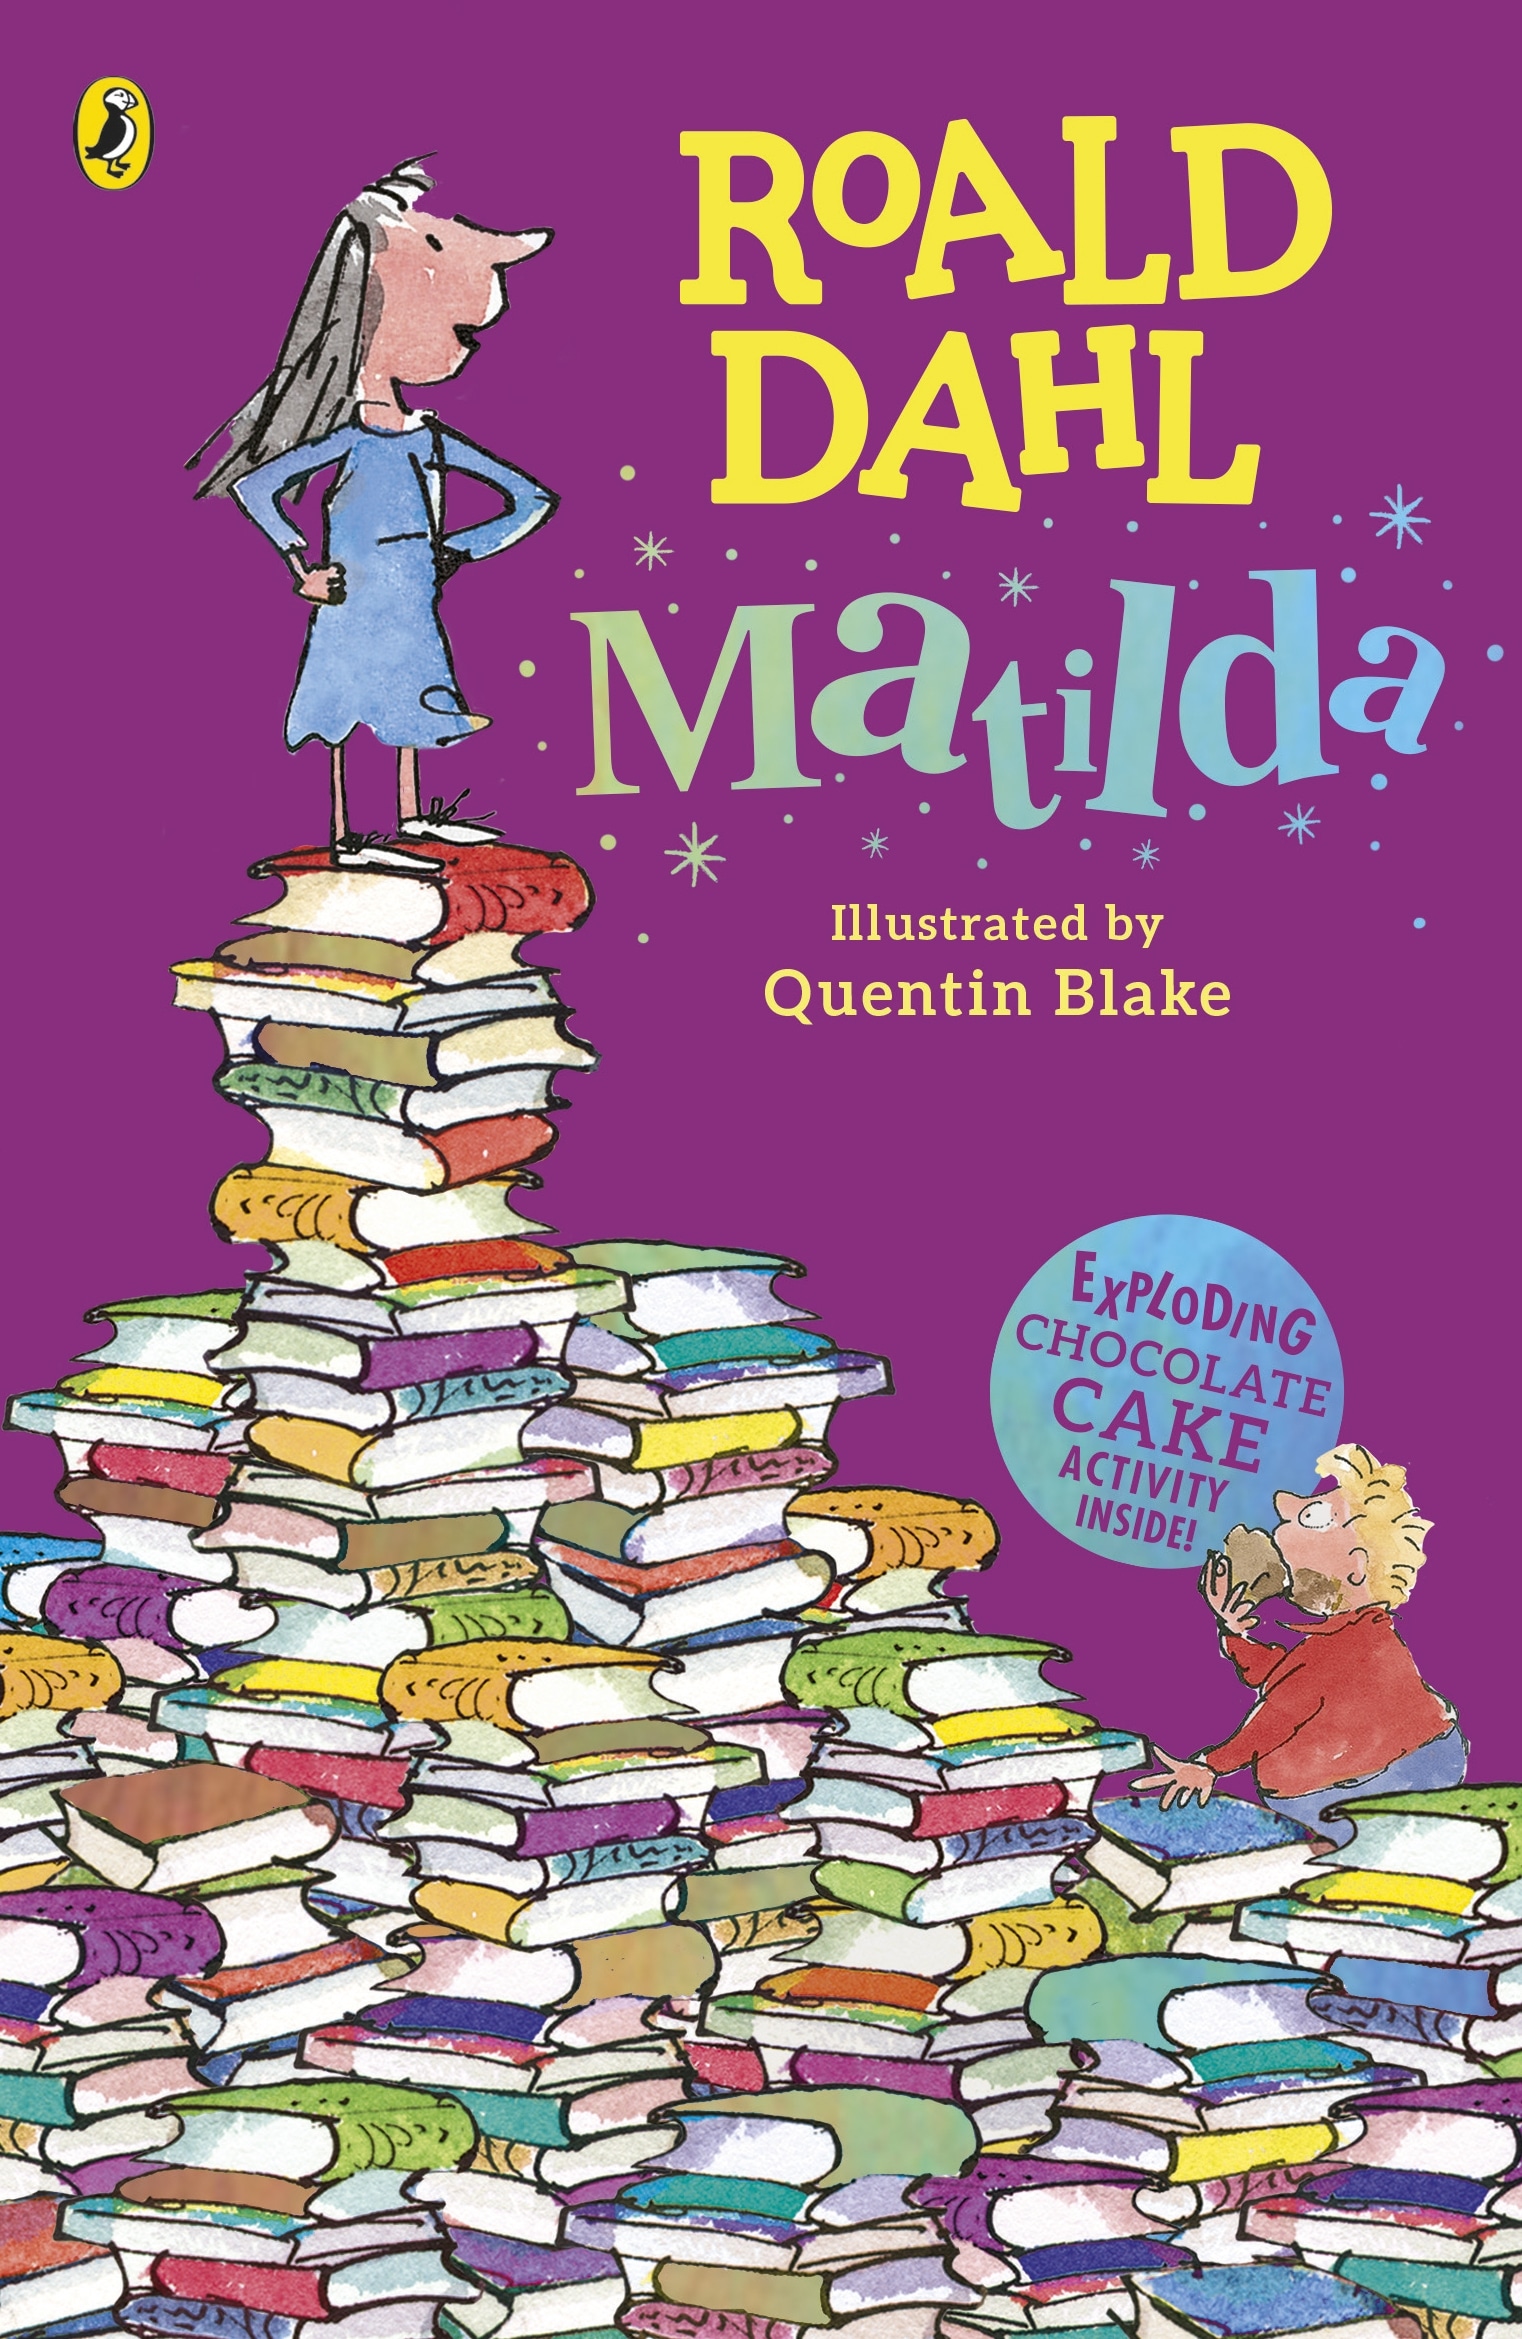 Book “Matilda” by Roald Dahl — February 11, 2016